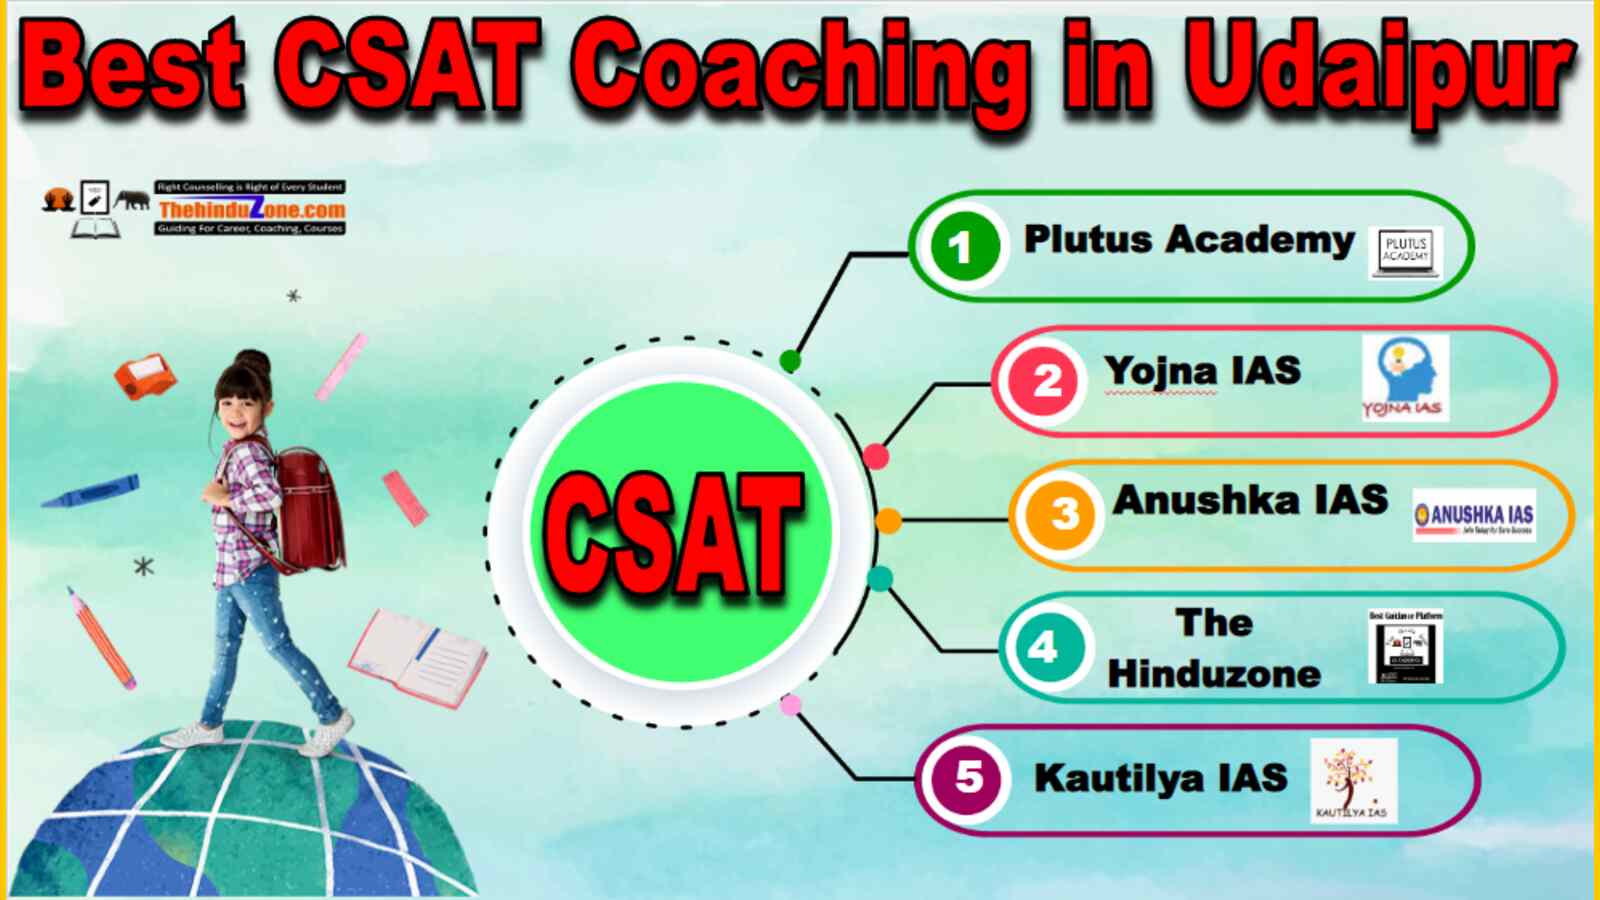 Best CSAT Coaching in Udaipur